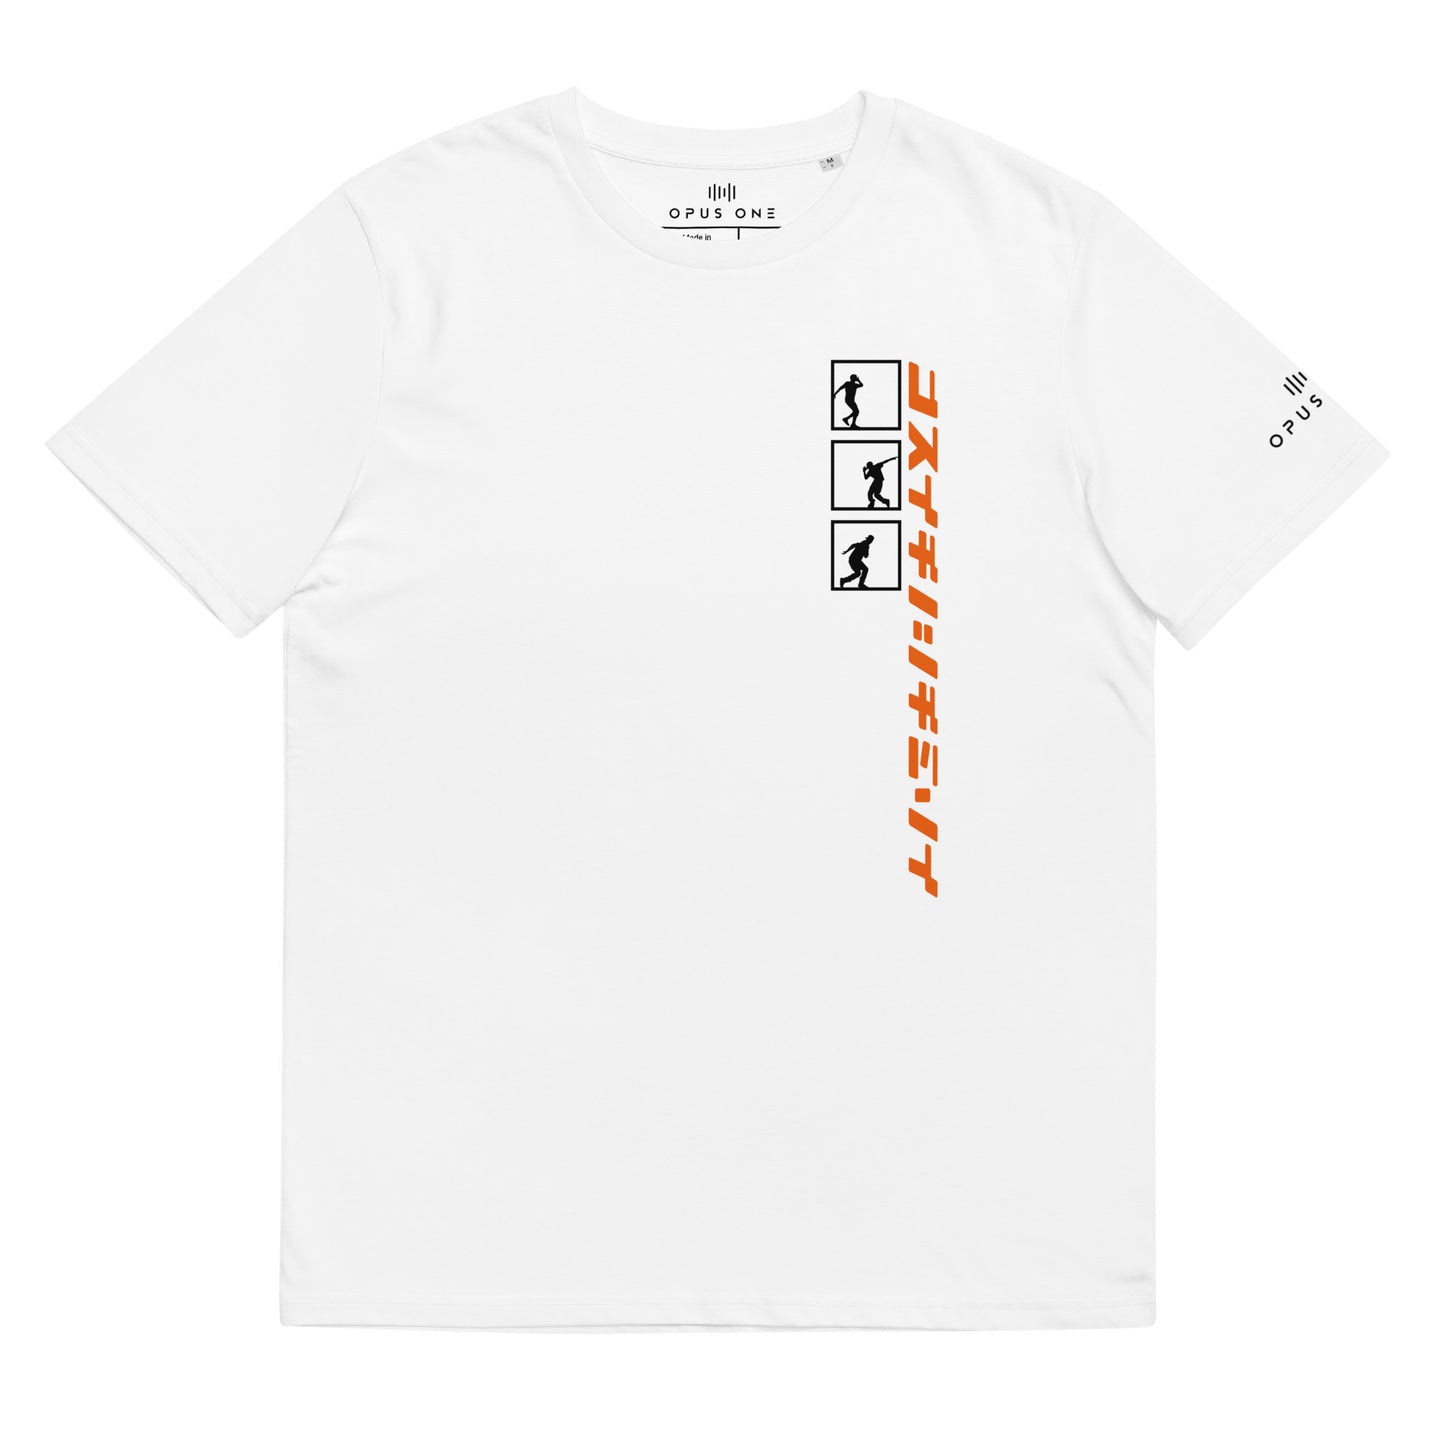 Ltd (Breakdance v2) Unisex organic cotton t-shirt (Black Text)